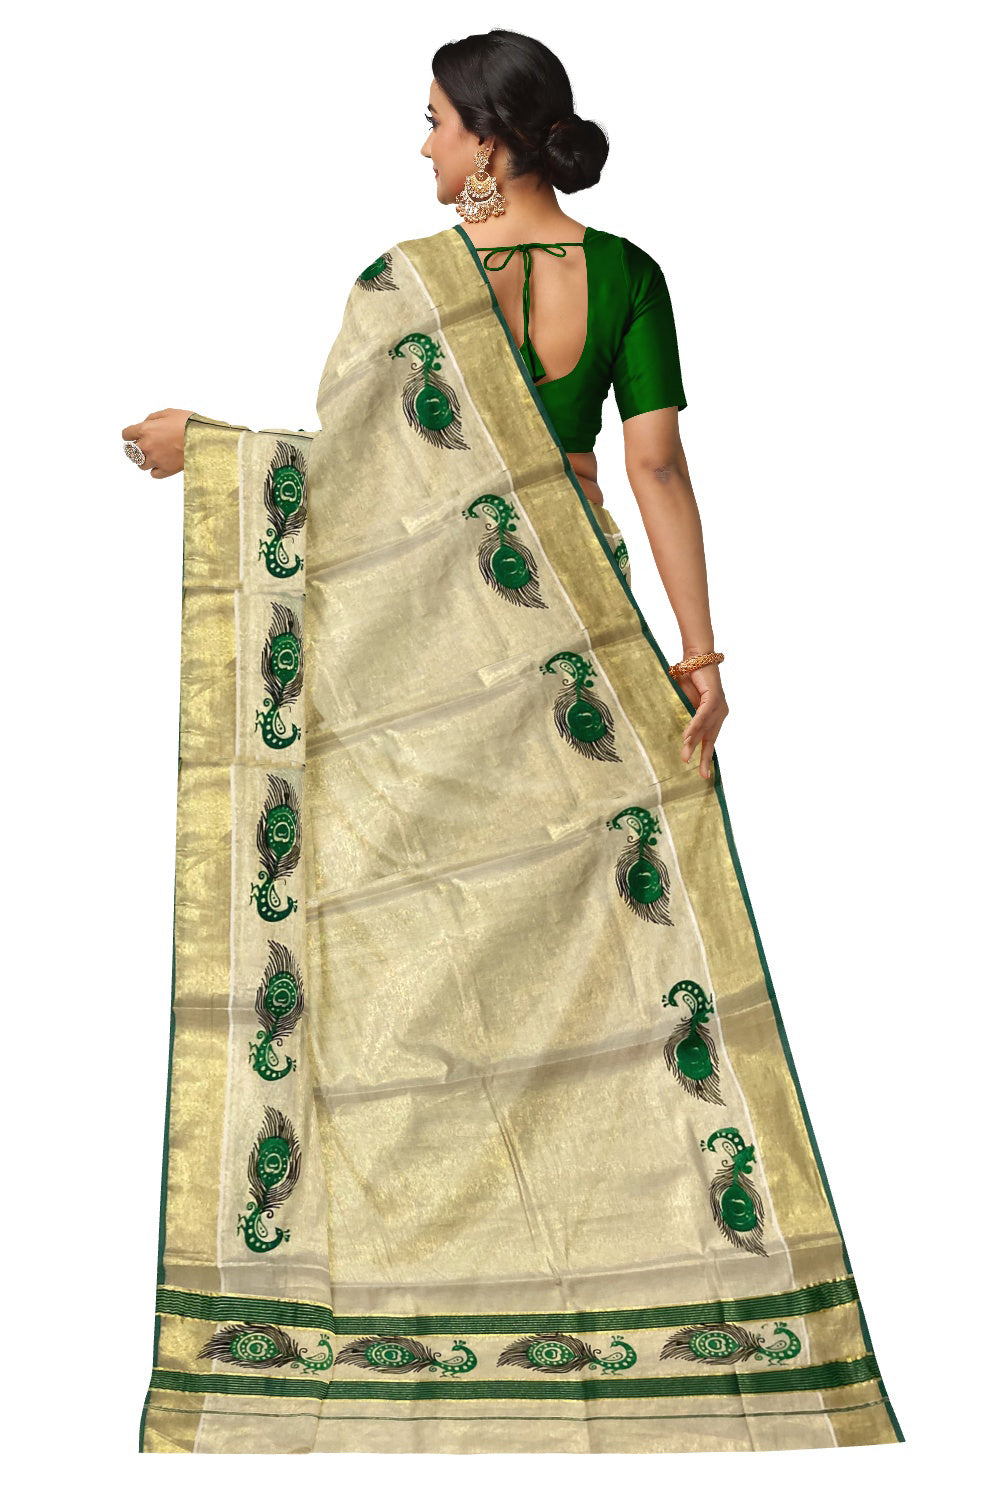 Kerala Tissue Kasavu Saree with Green and Black Peacock Block Printed Design